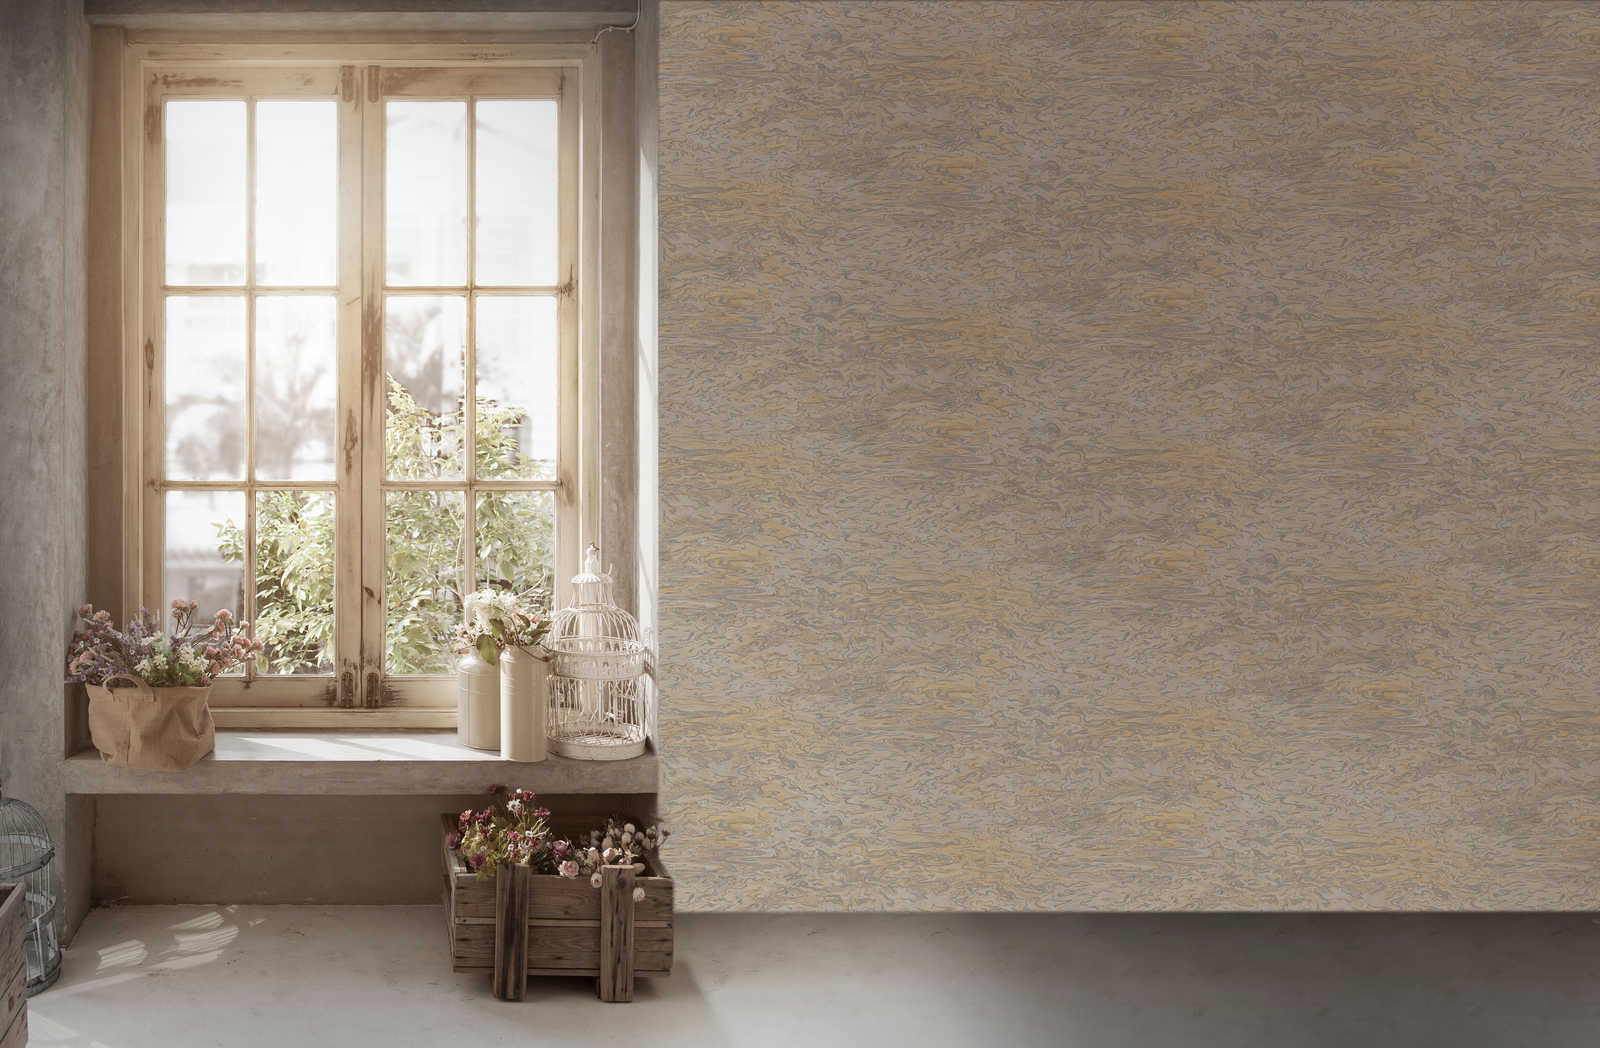             Marbled wallpaper abstract design - beige, grey, cream
        